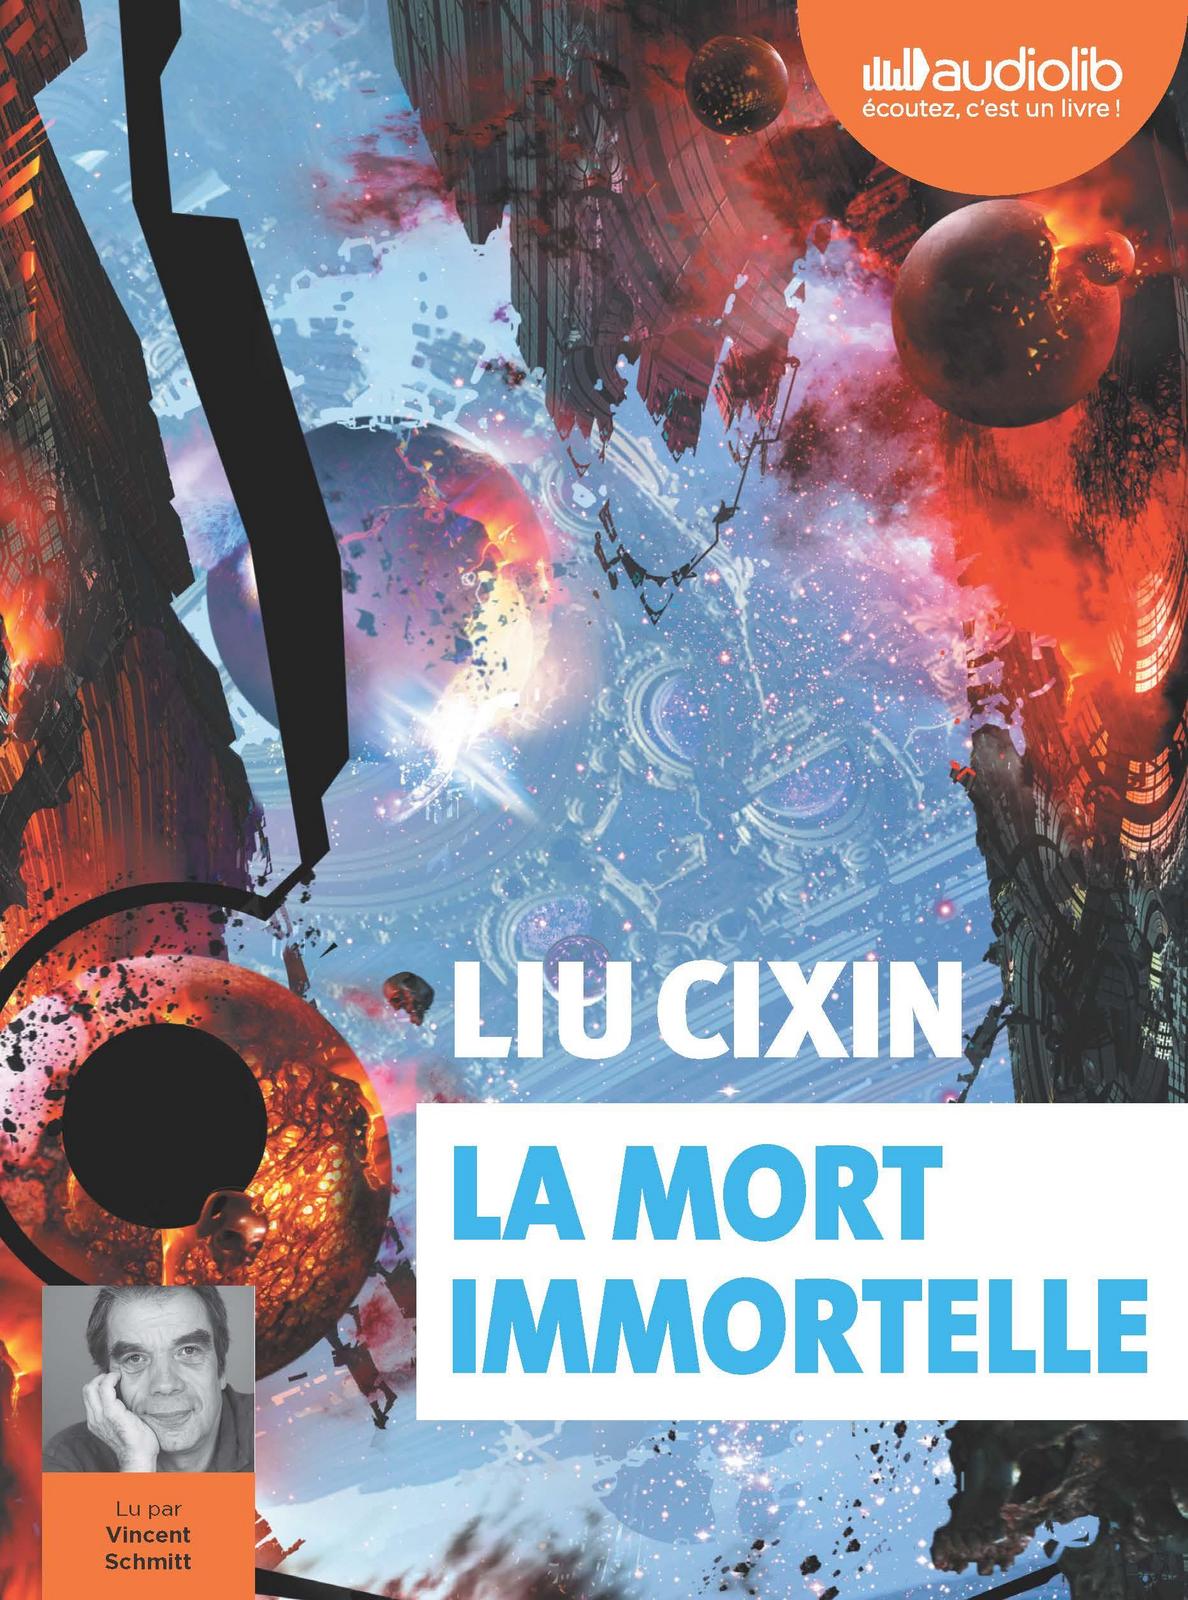 Cixin Liu, Vincent Schmitt, Gwennaël Gaffric: La mort immortelle (AudiobookFormat, French language, 2020, AUDIOLIB)